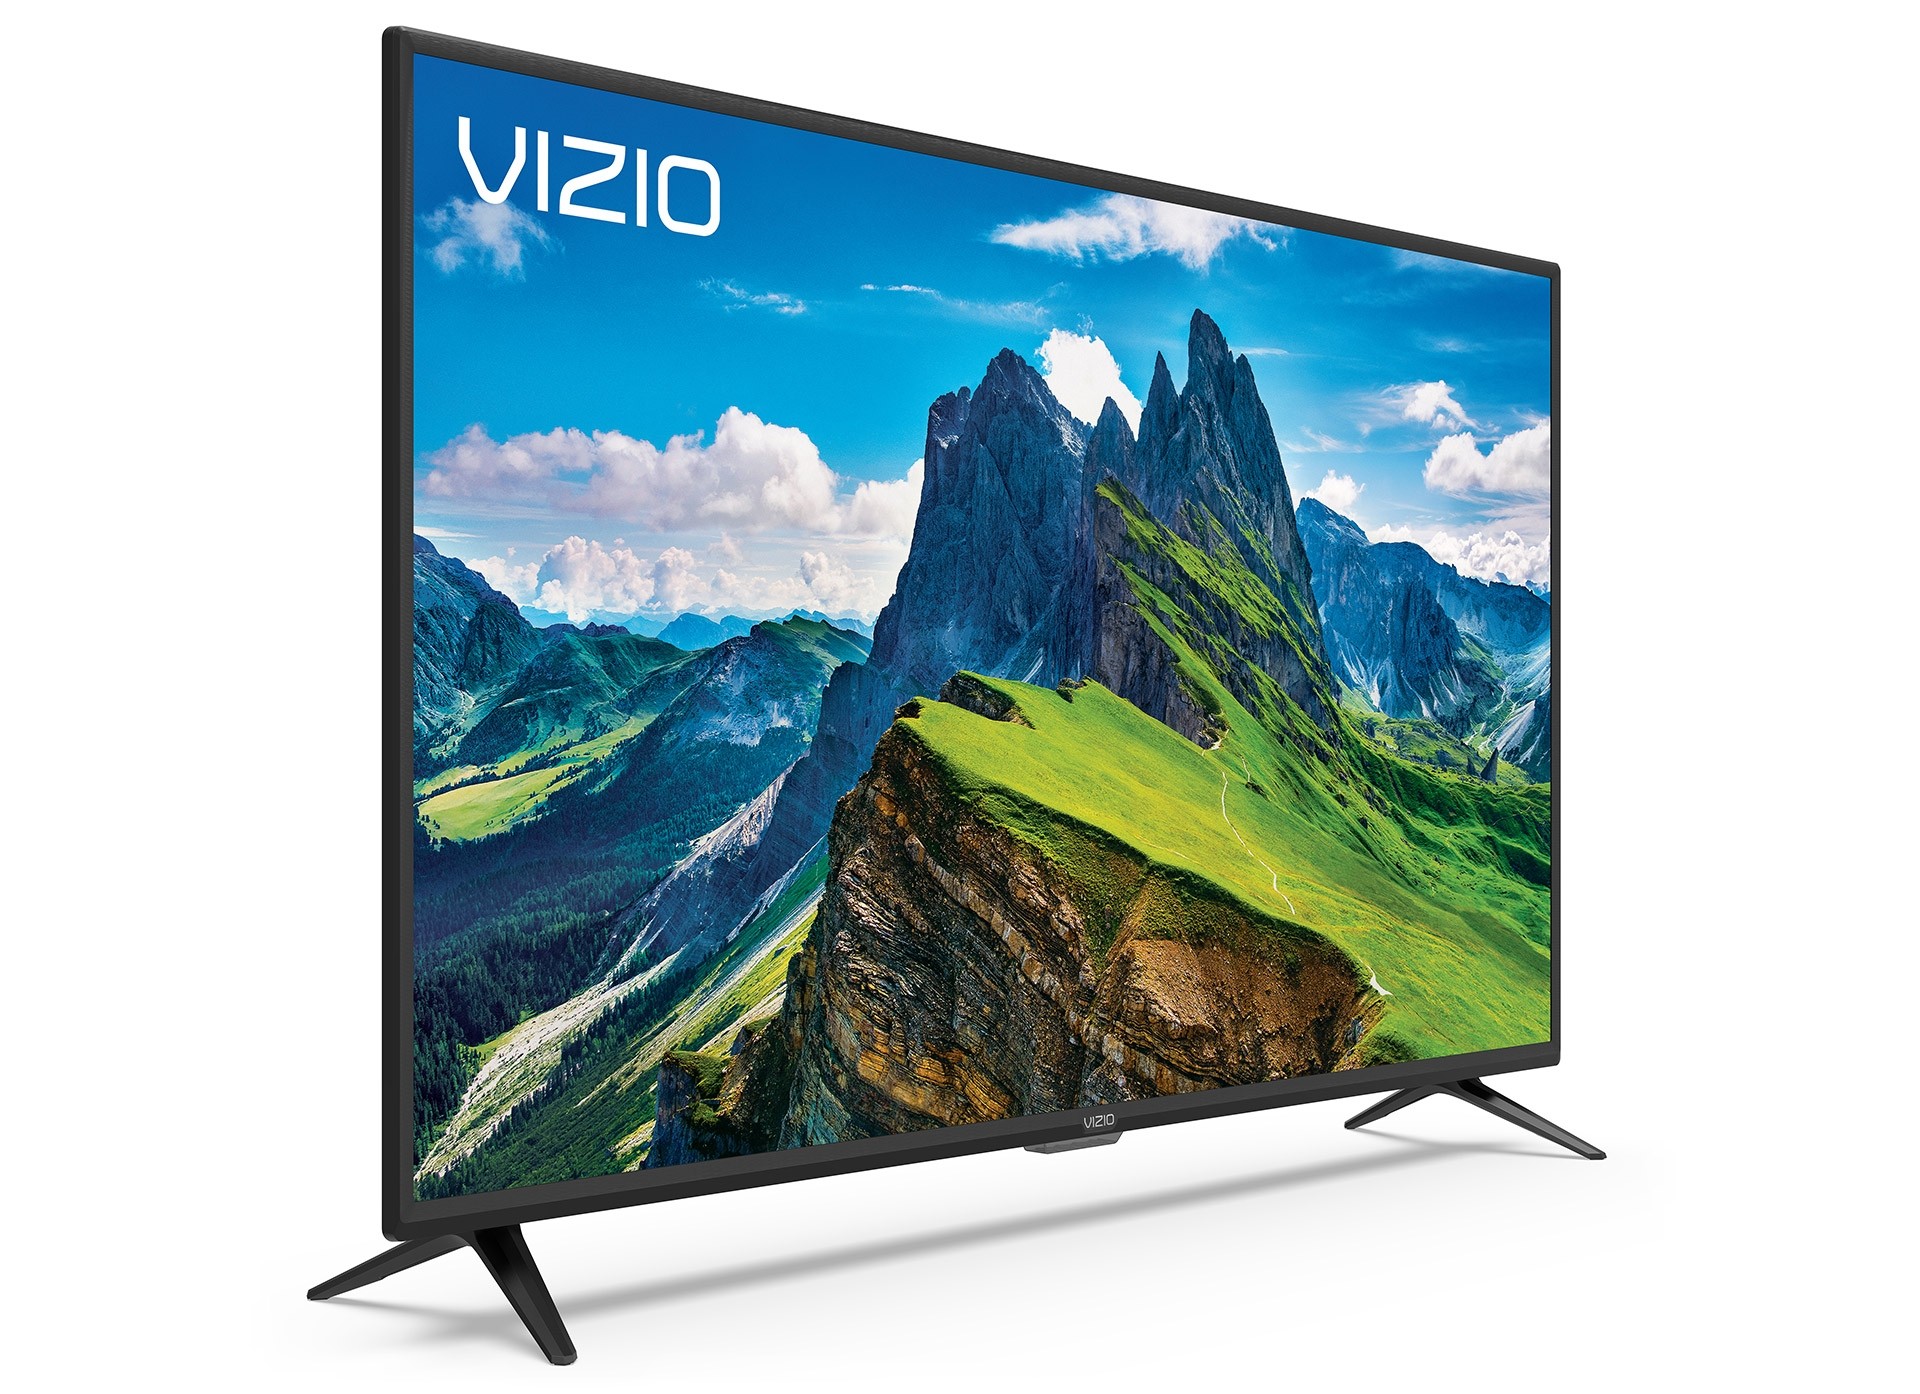 Restored Vizio 55" Class 4K (2160P) Smart LED TV (D55x-G1) (Refurbished) - image 2 of 5